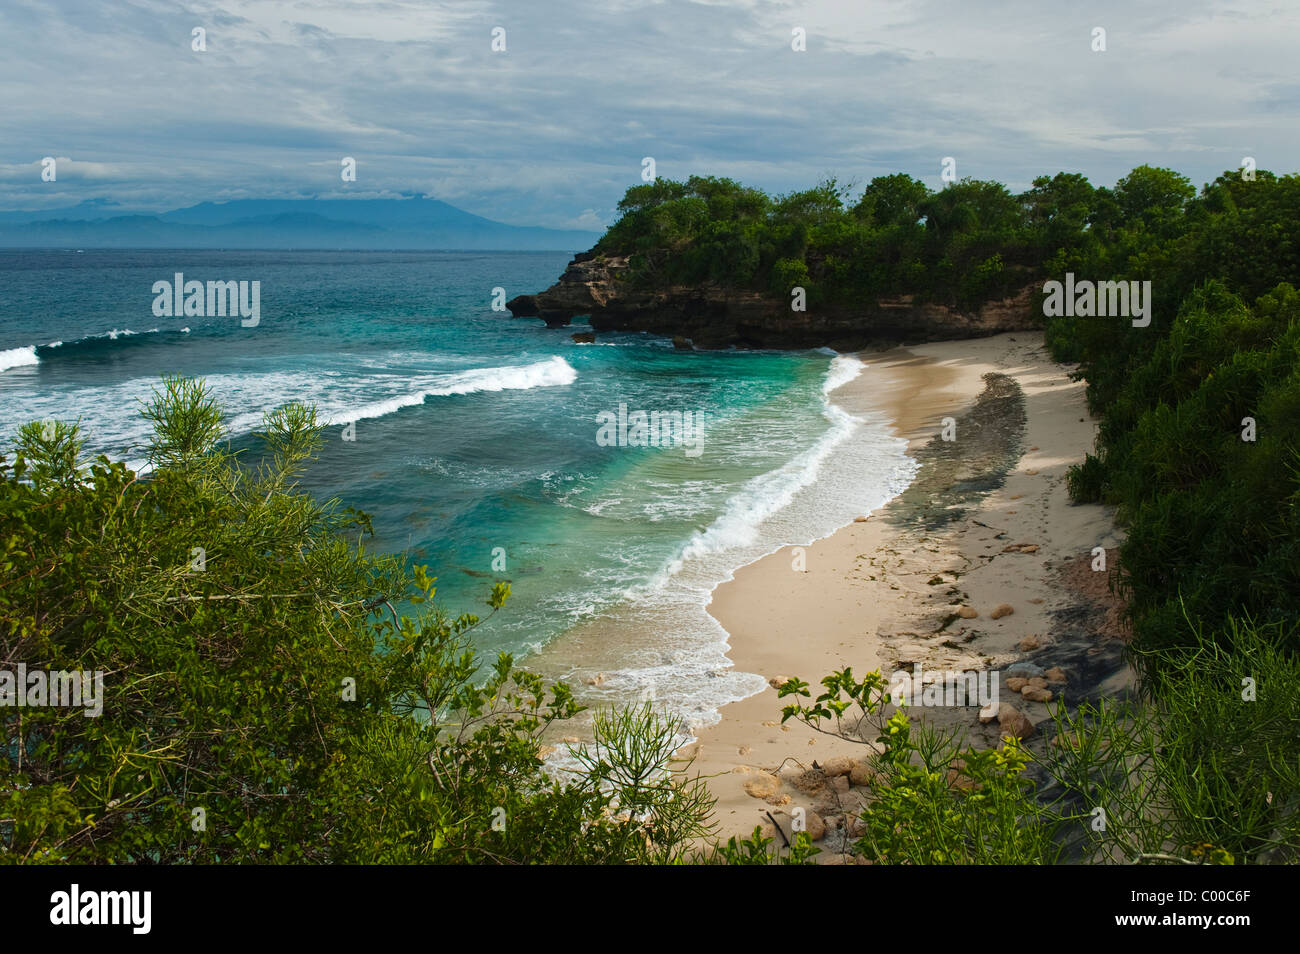 On the Balinese island of Nusa Lembongan lies the small beach area called Mushroom Bay. A beautiful tropical white sand beach. Stock Photo